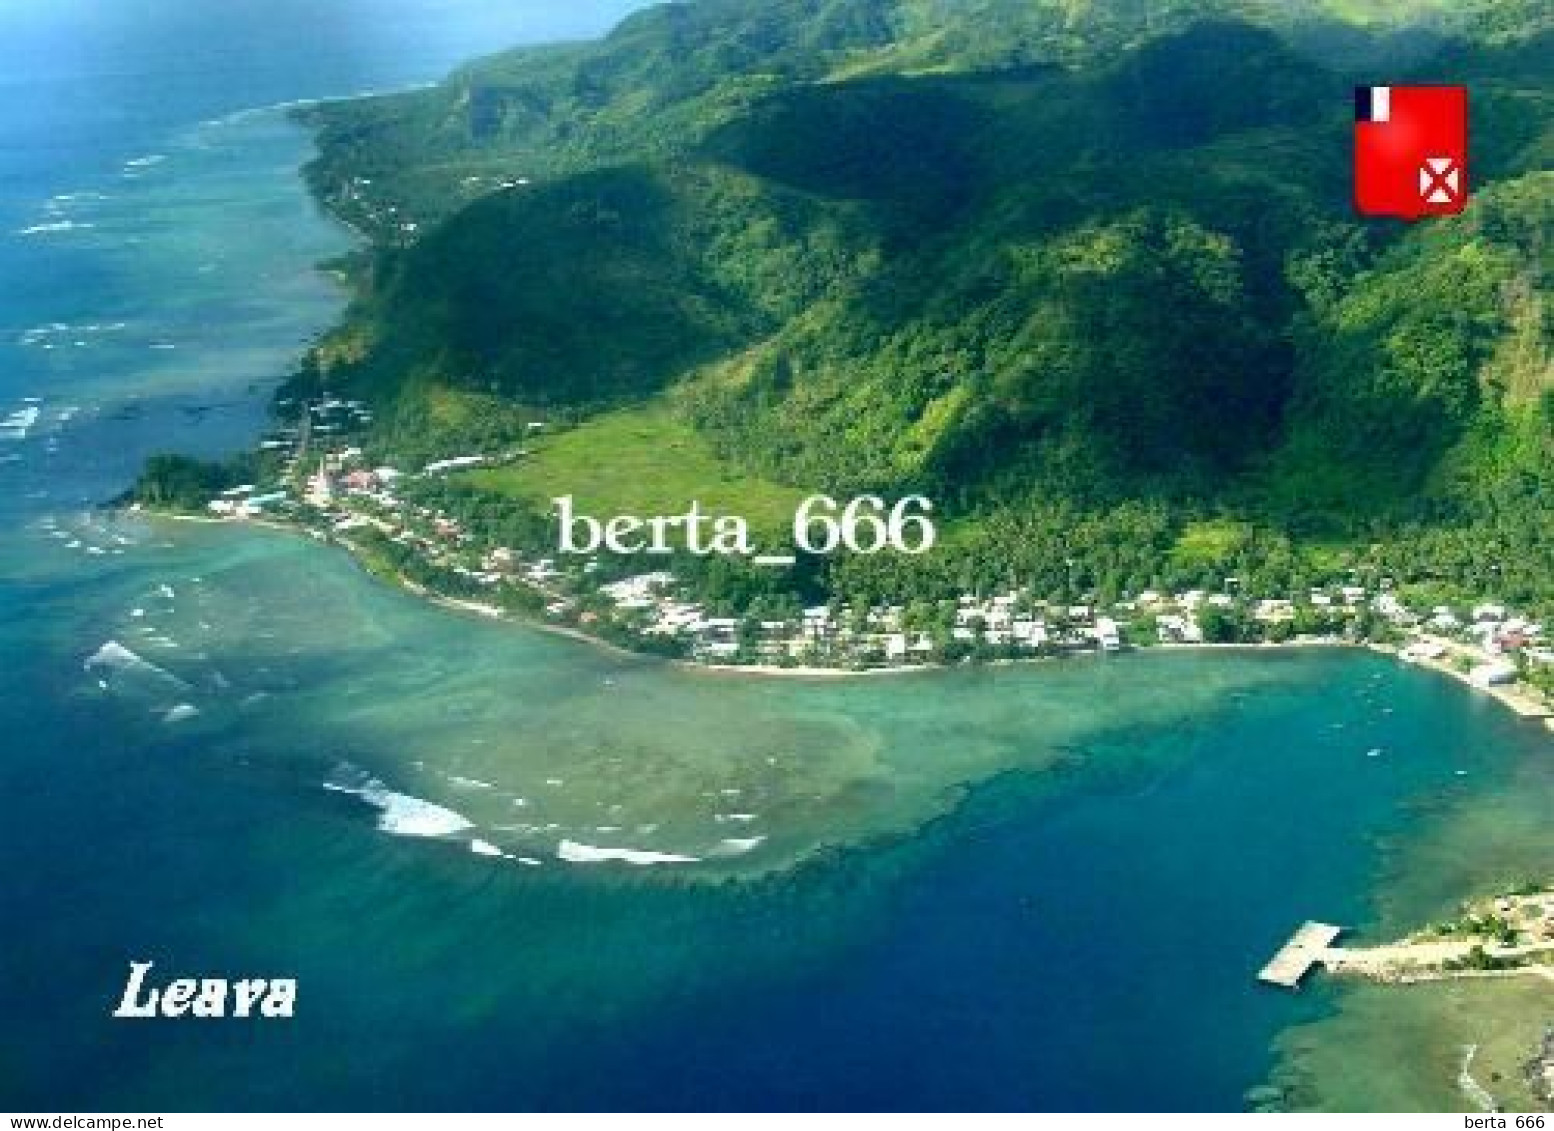 Wallis And Futuna Leava Aerial View New Postcard - Wallis-Et-Futuna